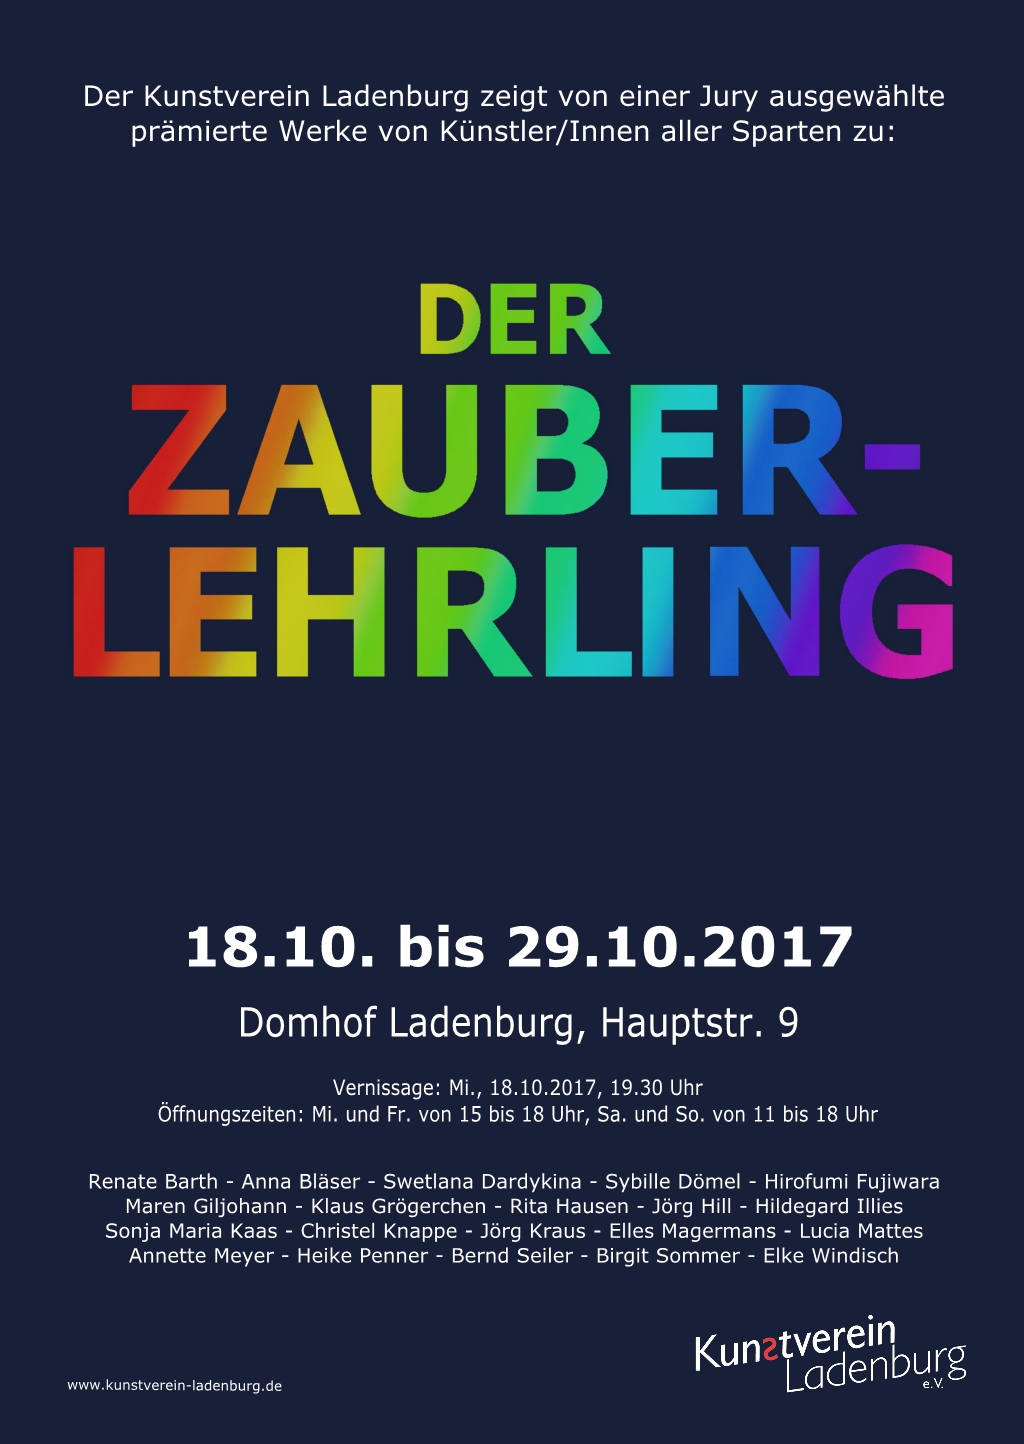 /images/kvl/Ausstellungen/20171018_Zauberlehrling/original/00_Zauberlehrling Plakat - 1.jpg